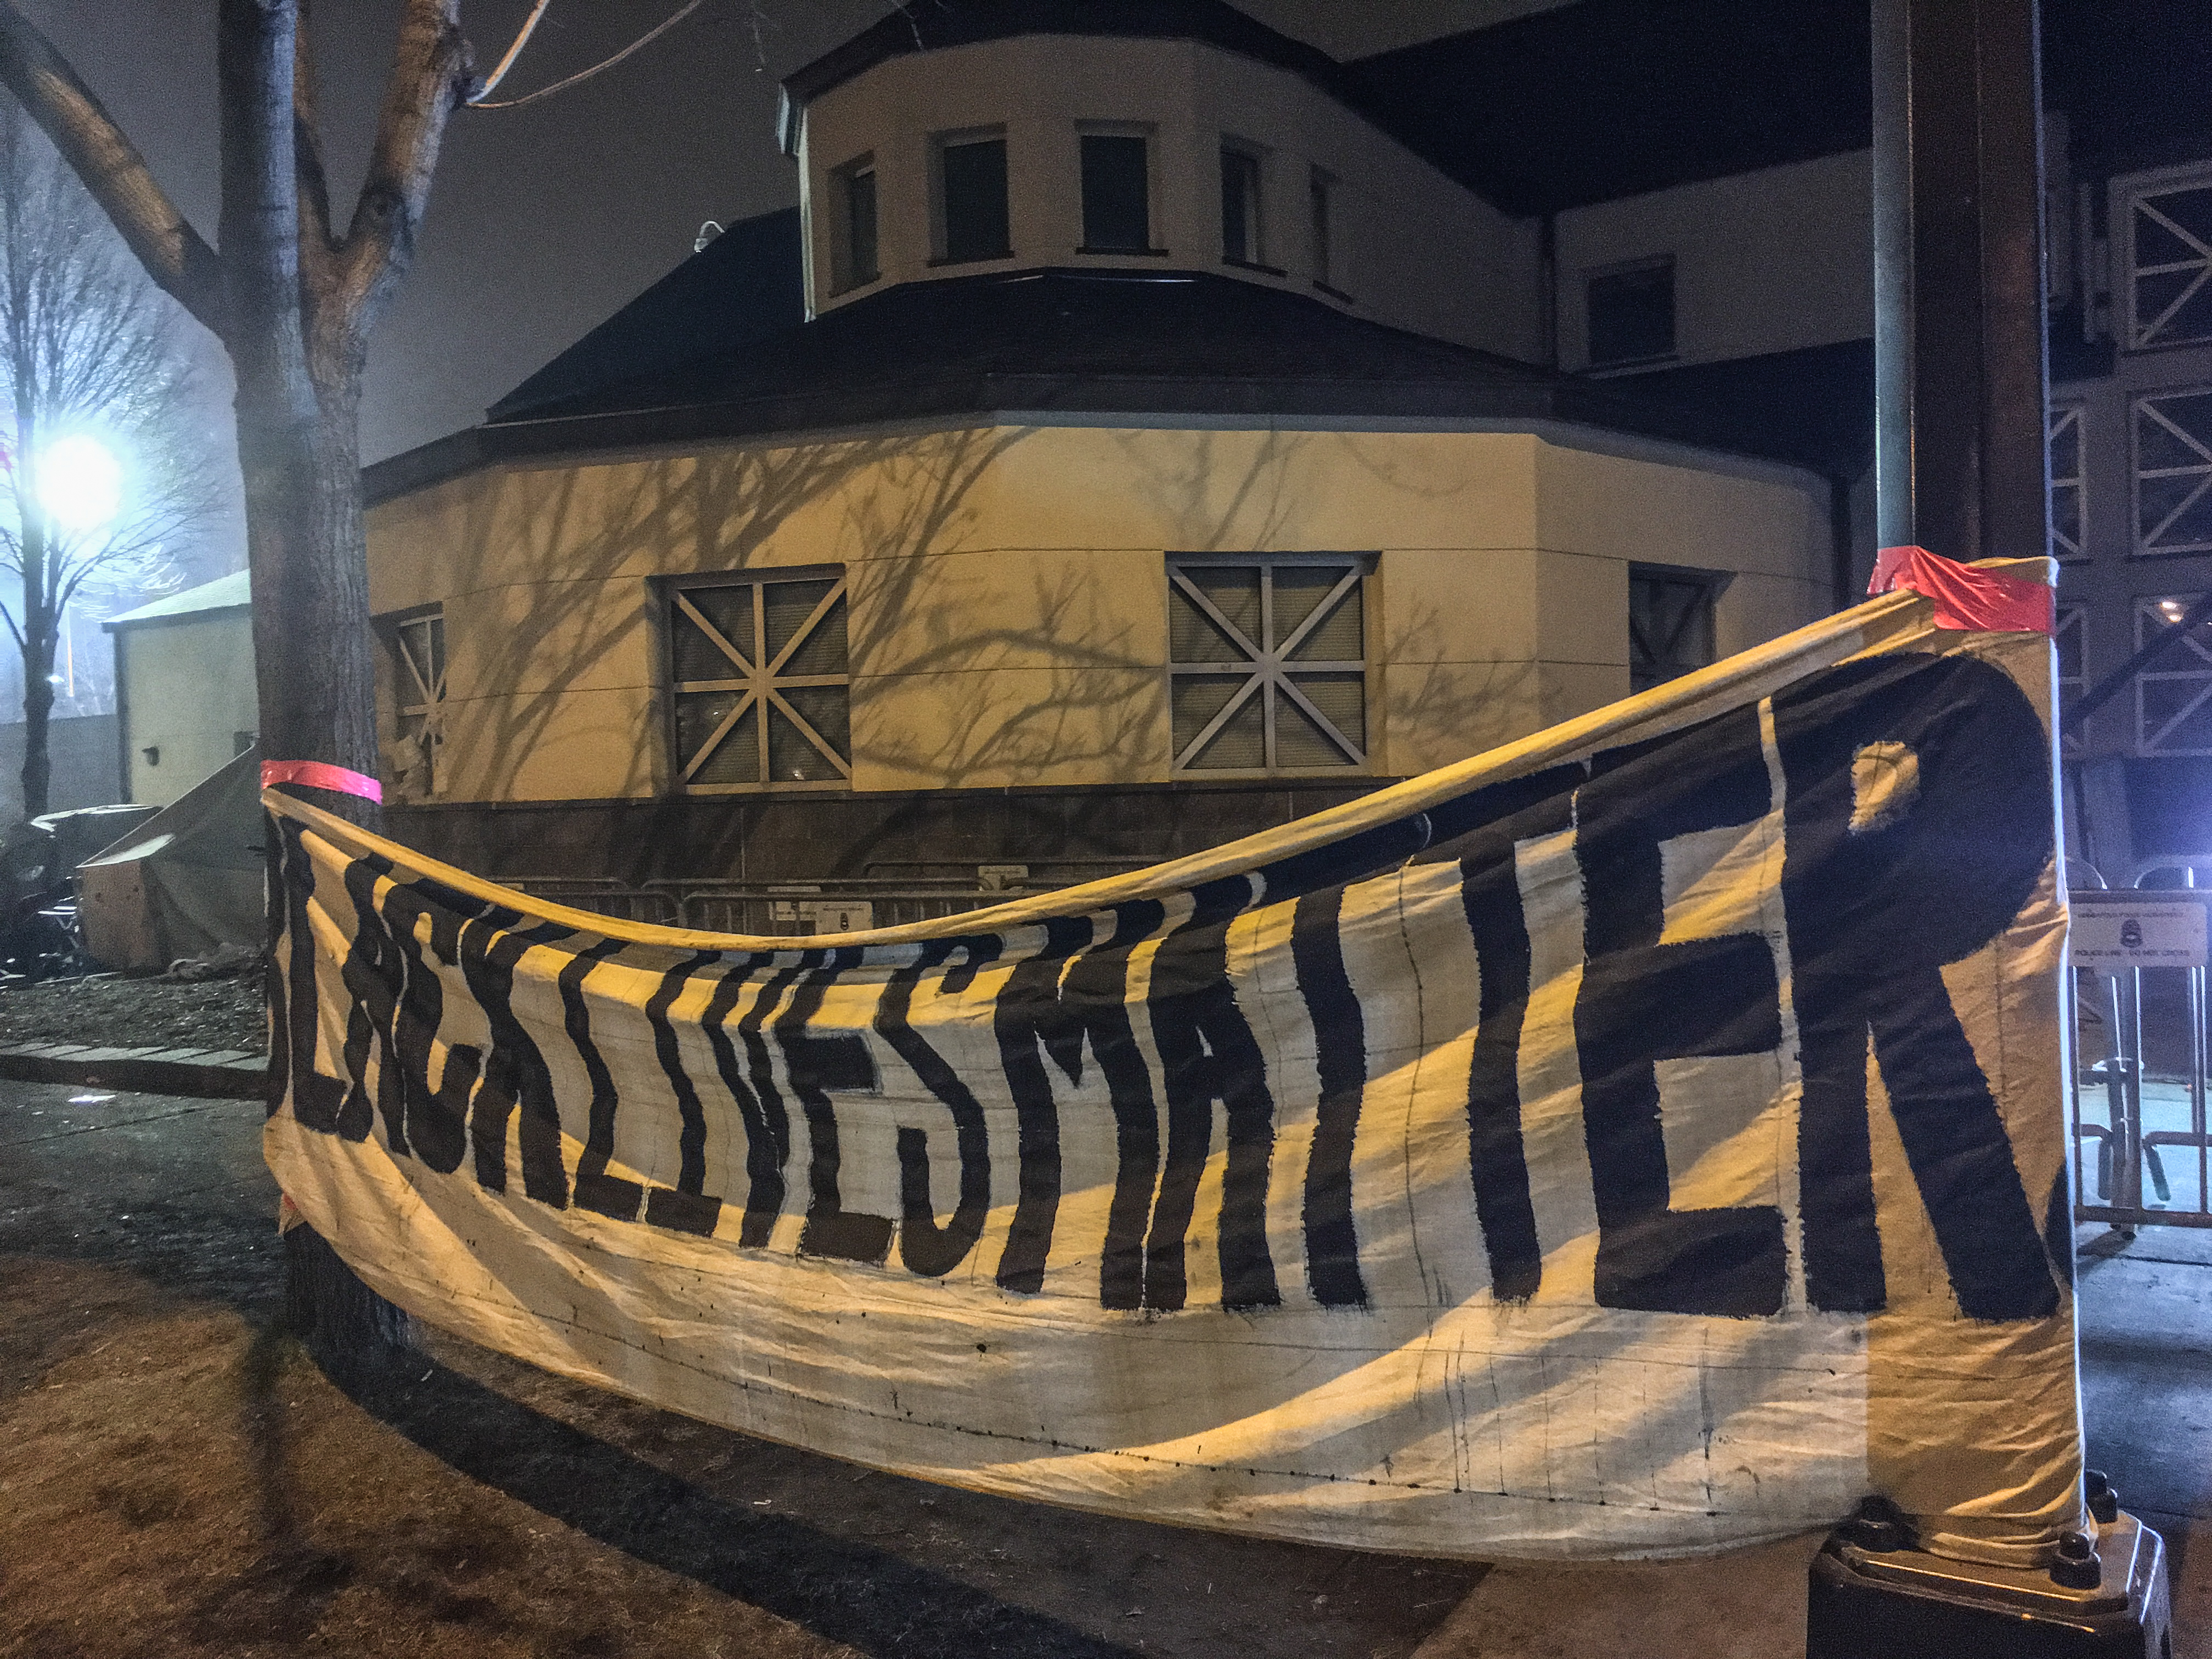 Black Lives Matter banner. Photo courtesy of WikiMedia.